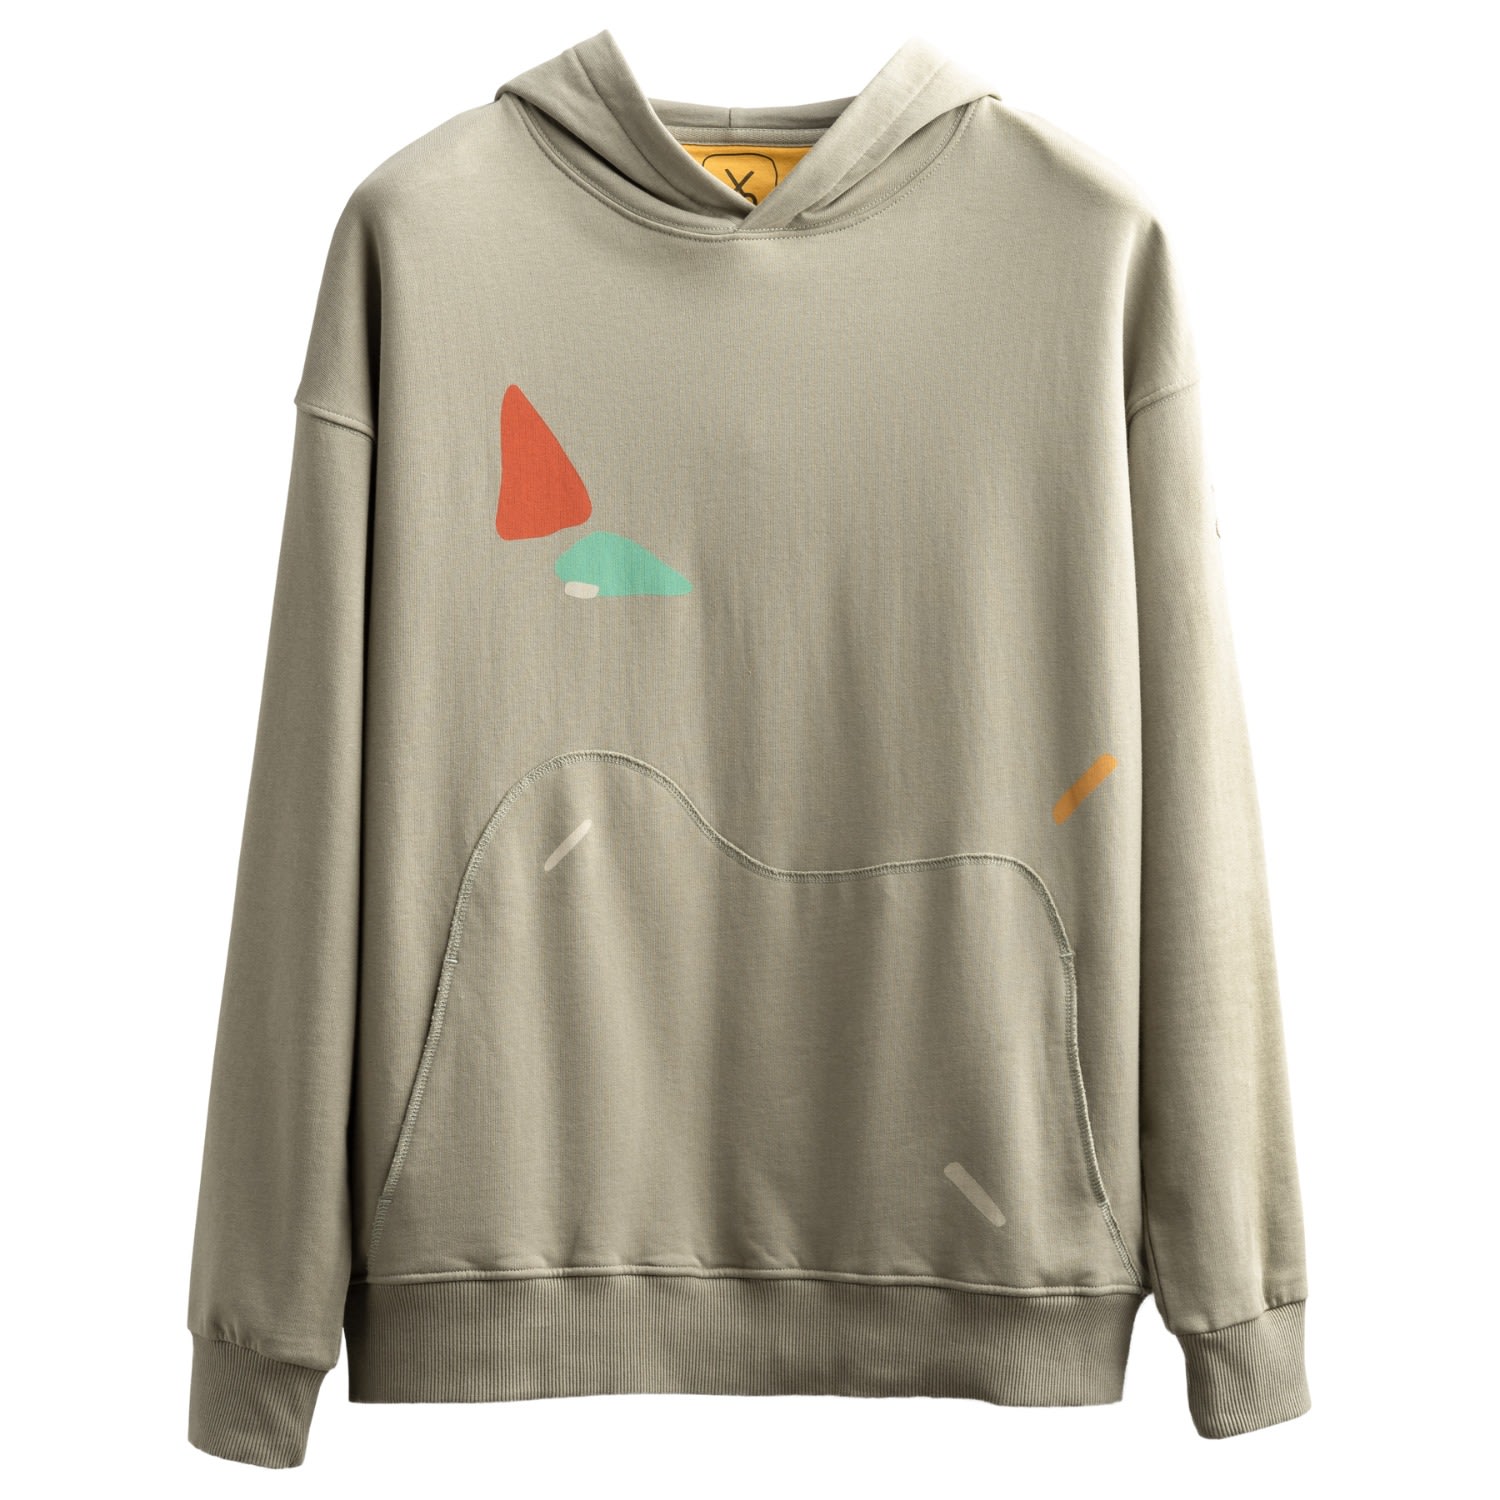 Men's Grey Unisex Design Hoodie Sweatshirt - Apenda - Concrete Small KAFT